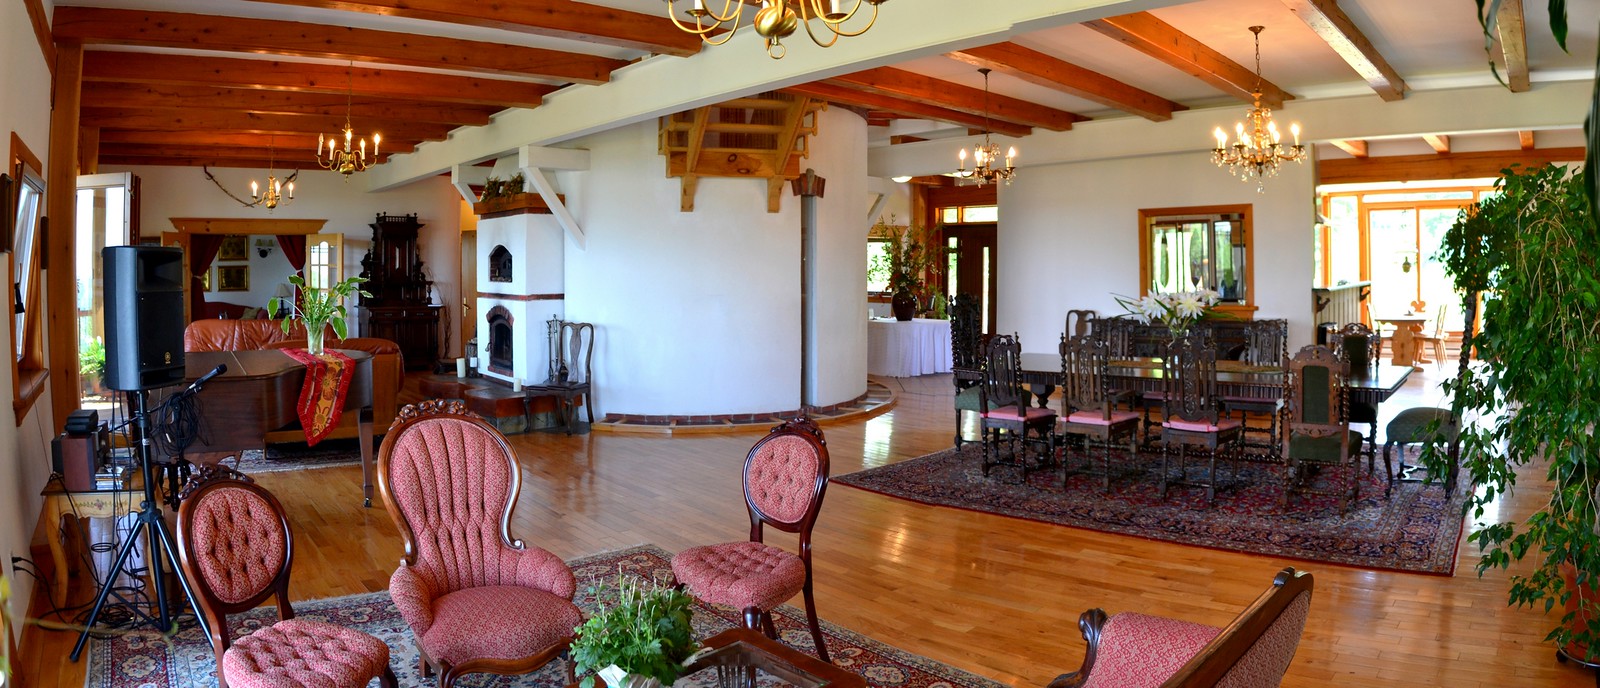 Grand dining room - Salle de réception du Domaine Tomali-Maniatyn